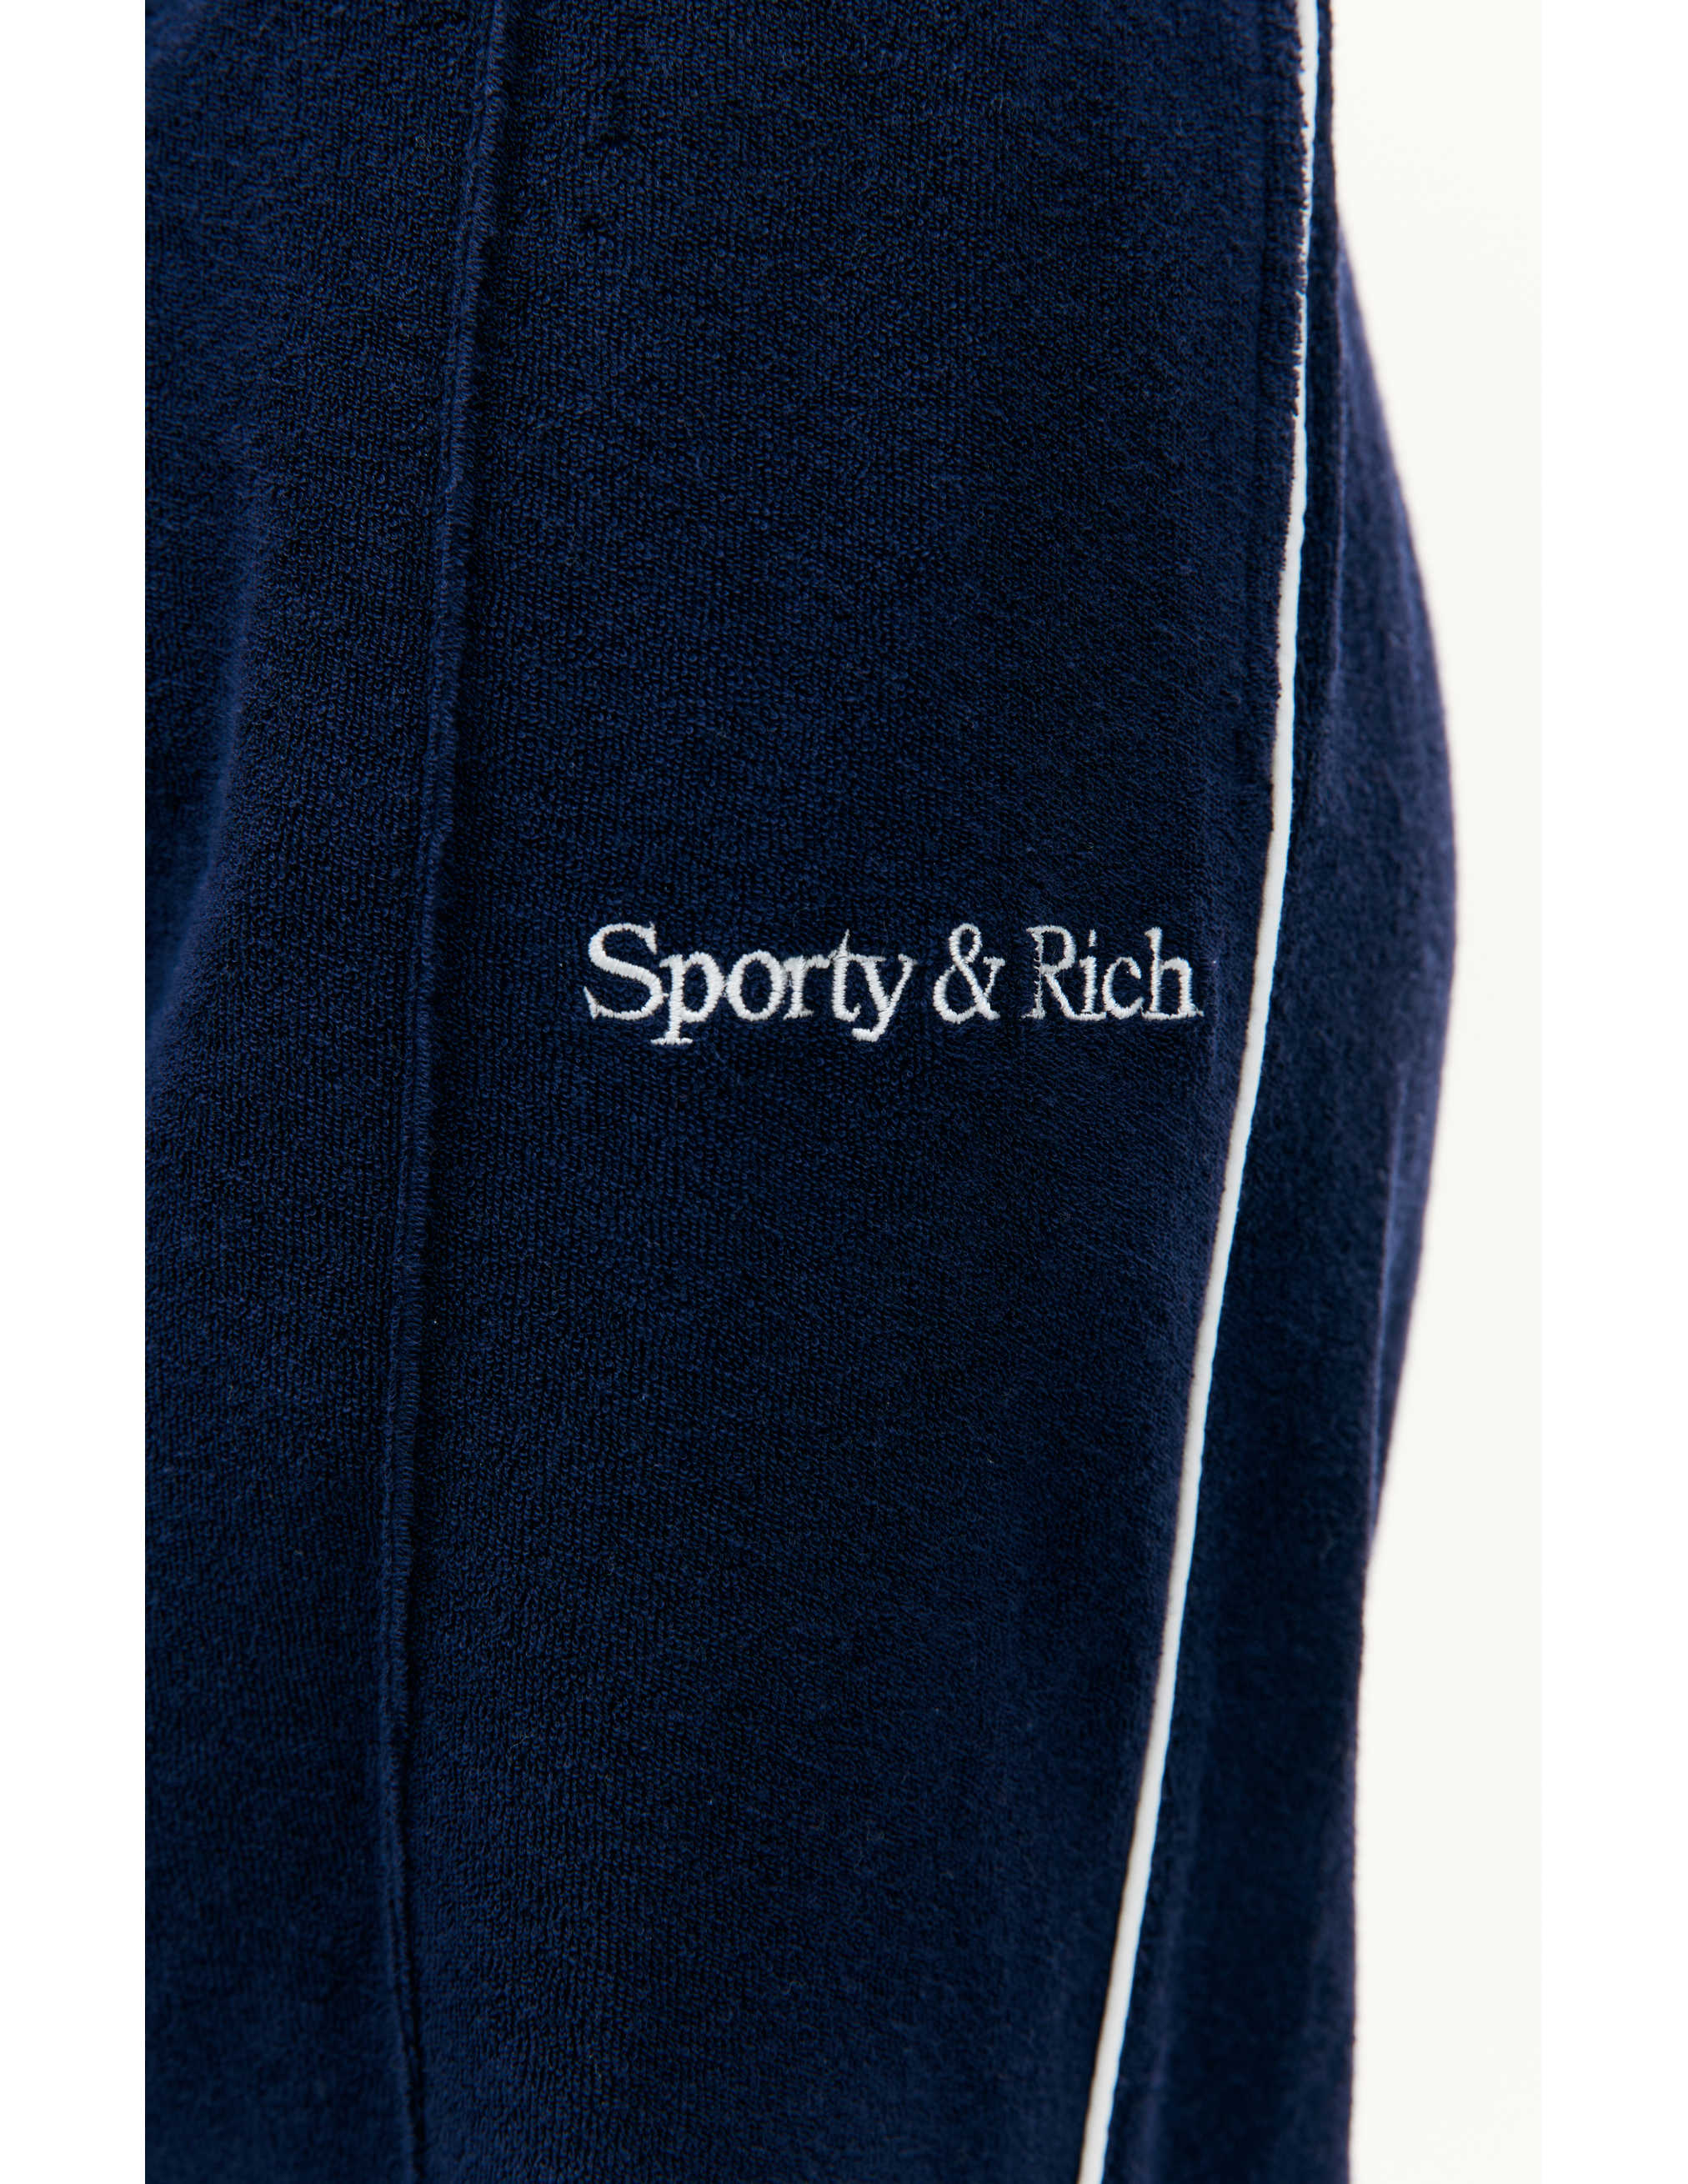 Спортивные брюки с лампасами SPORTY & RICH PA921NA, размер M;L;XL - фото 5